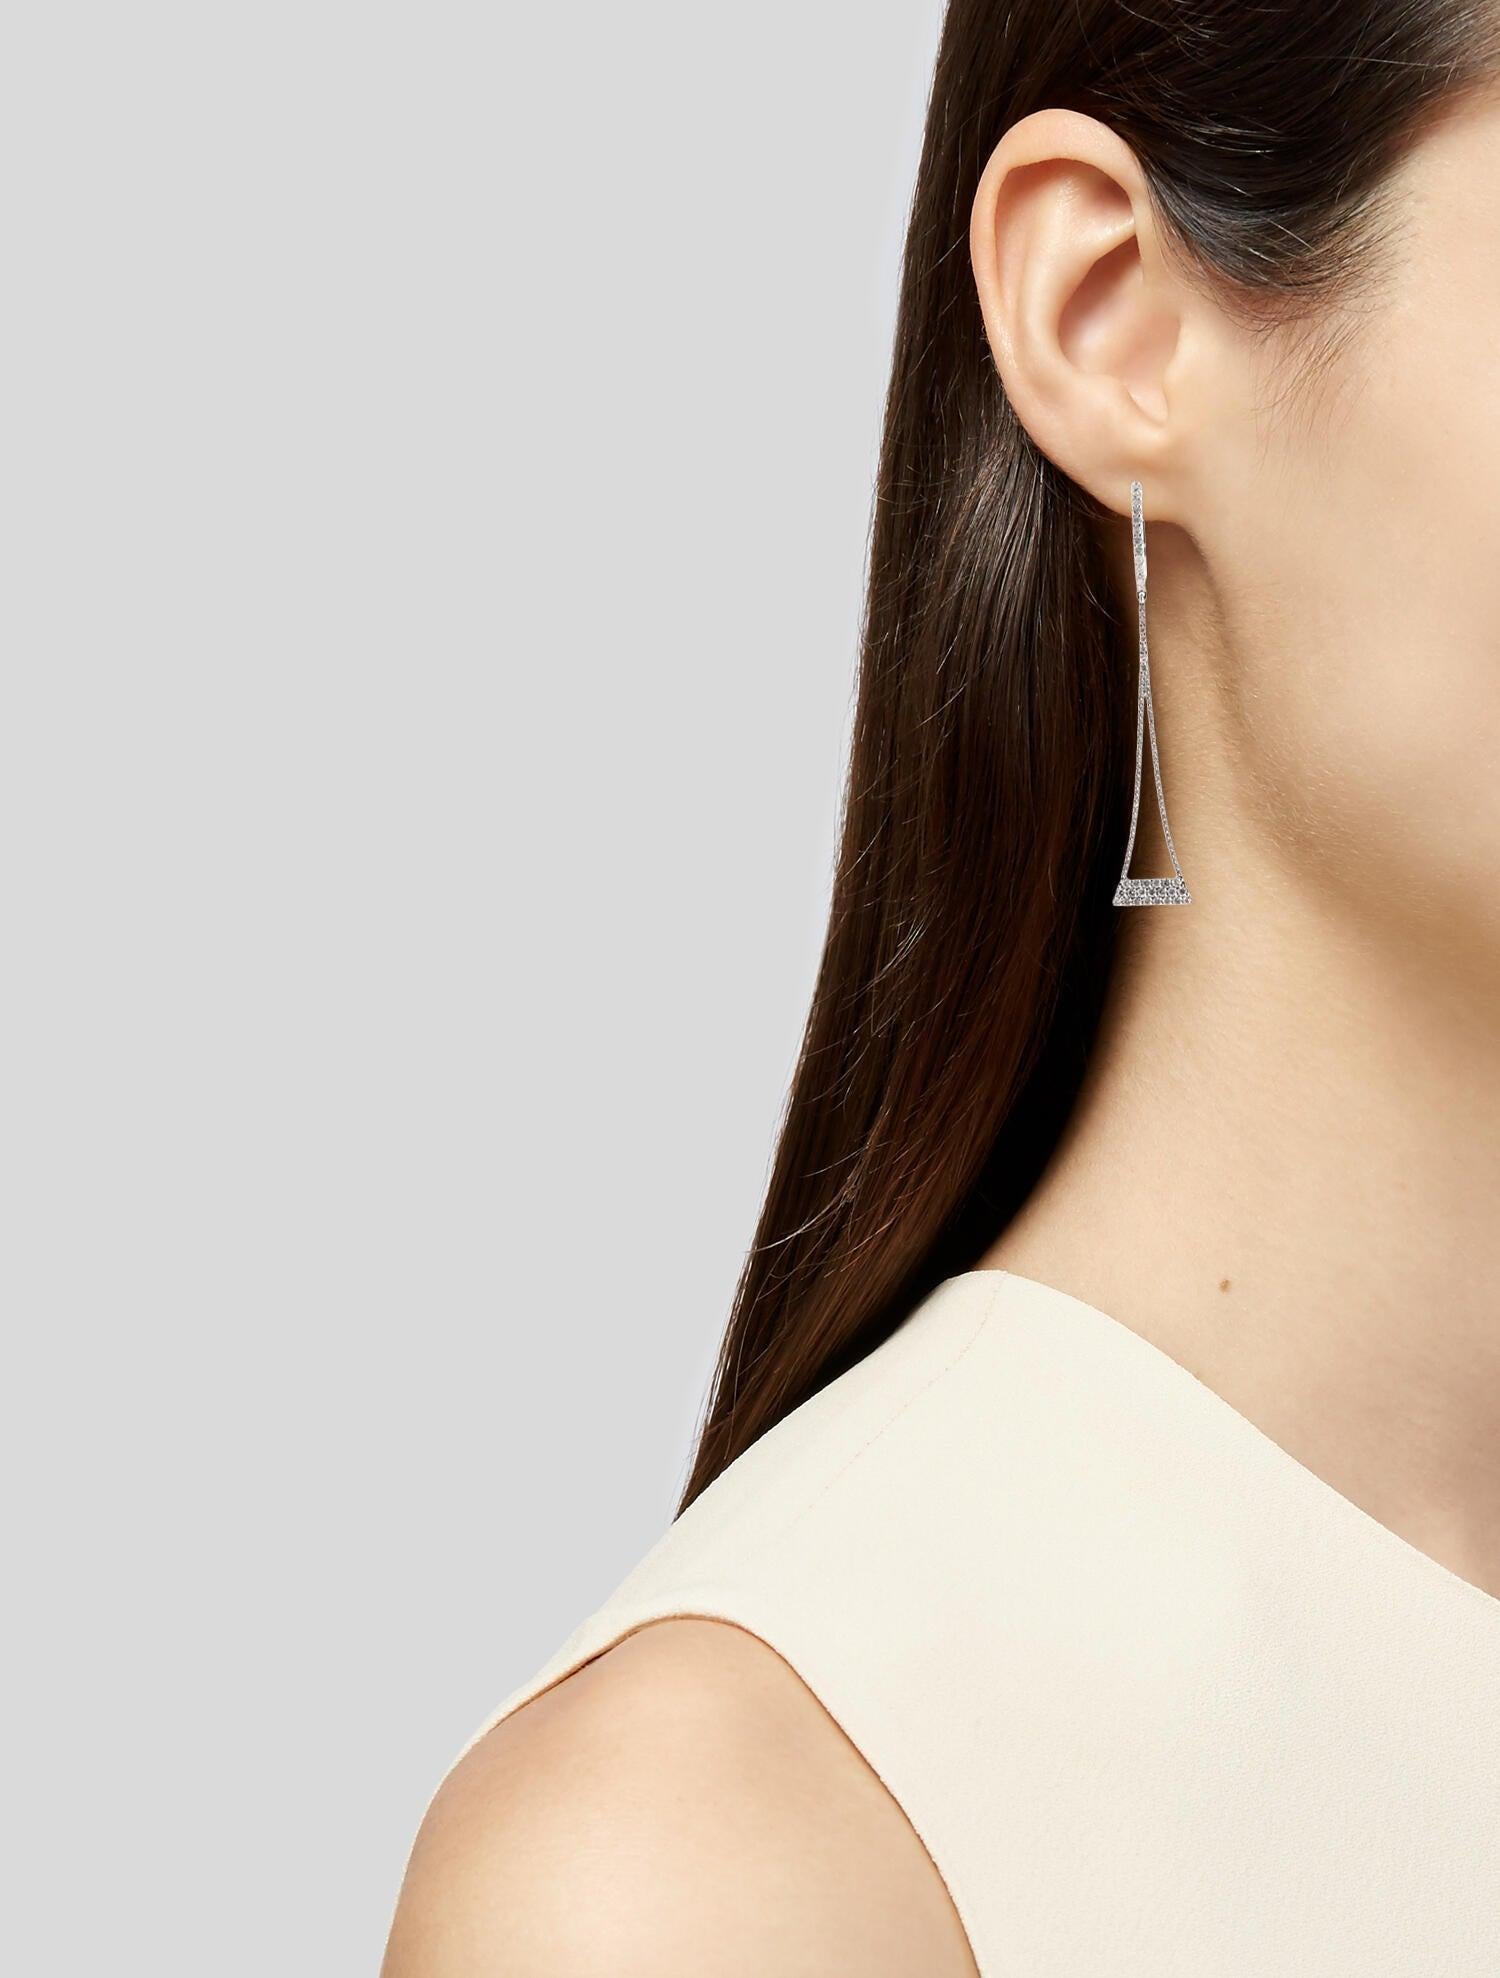 Gorgeous 14K Diamond Drop Earrings - 1.16ctw Jewelry, Brilliance & Elegance For Sale 1